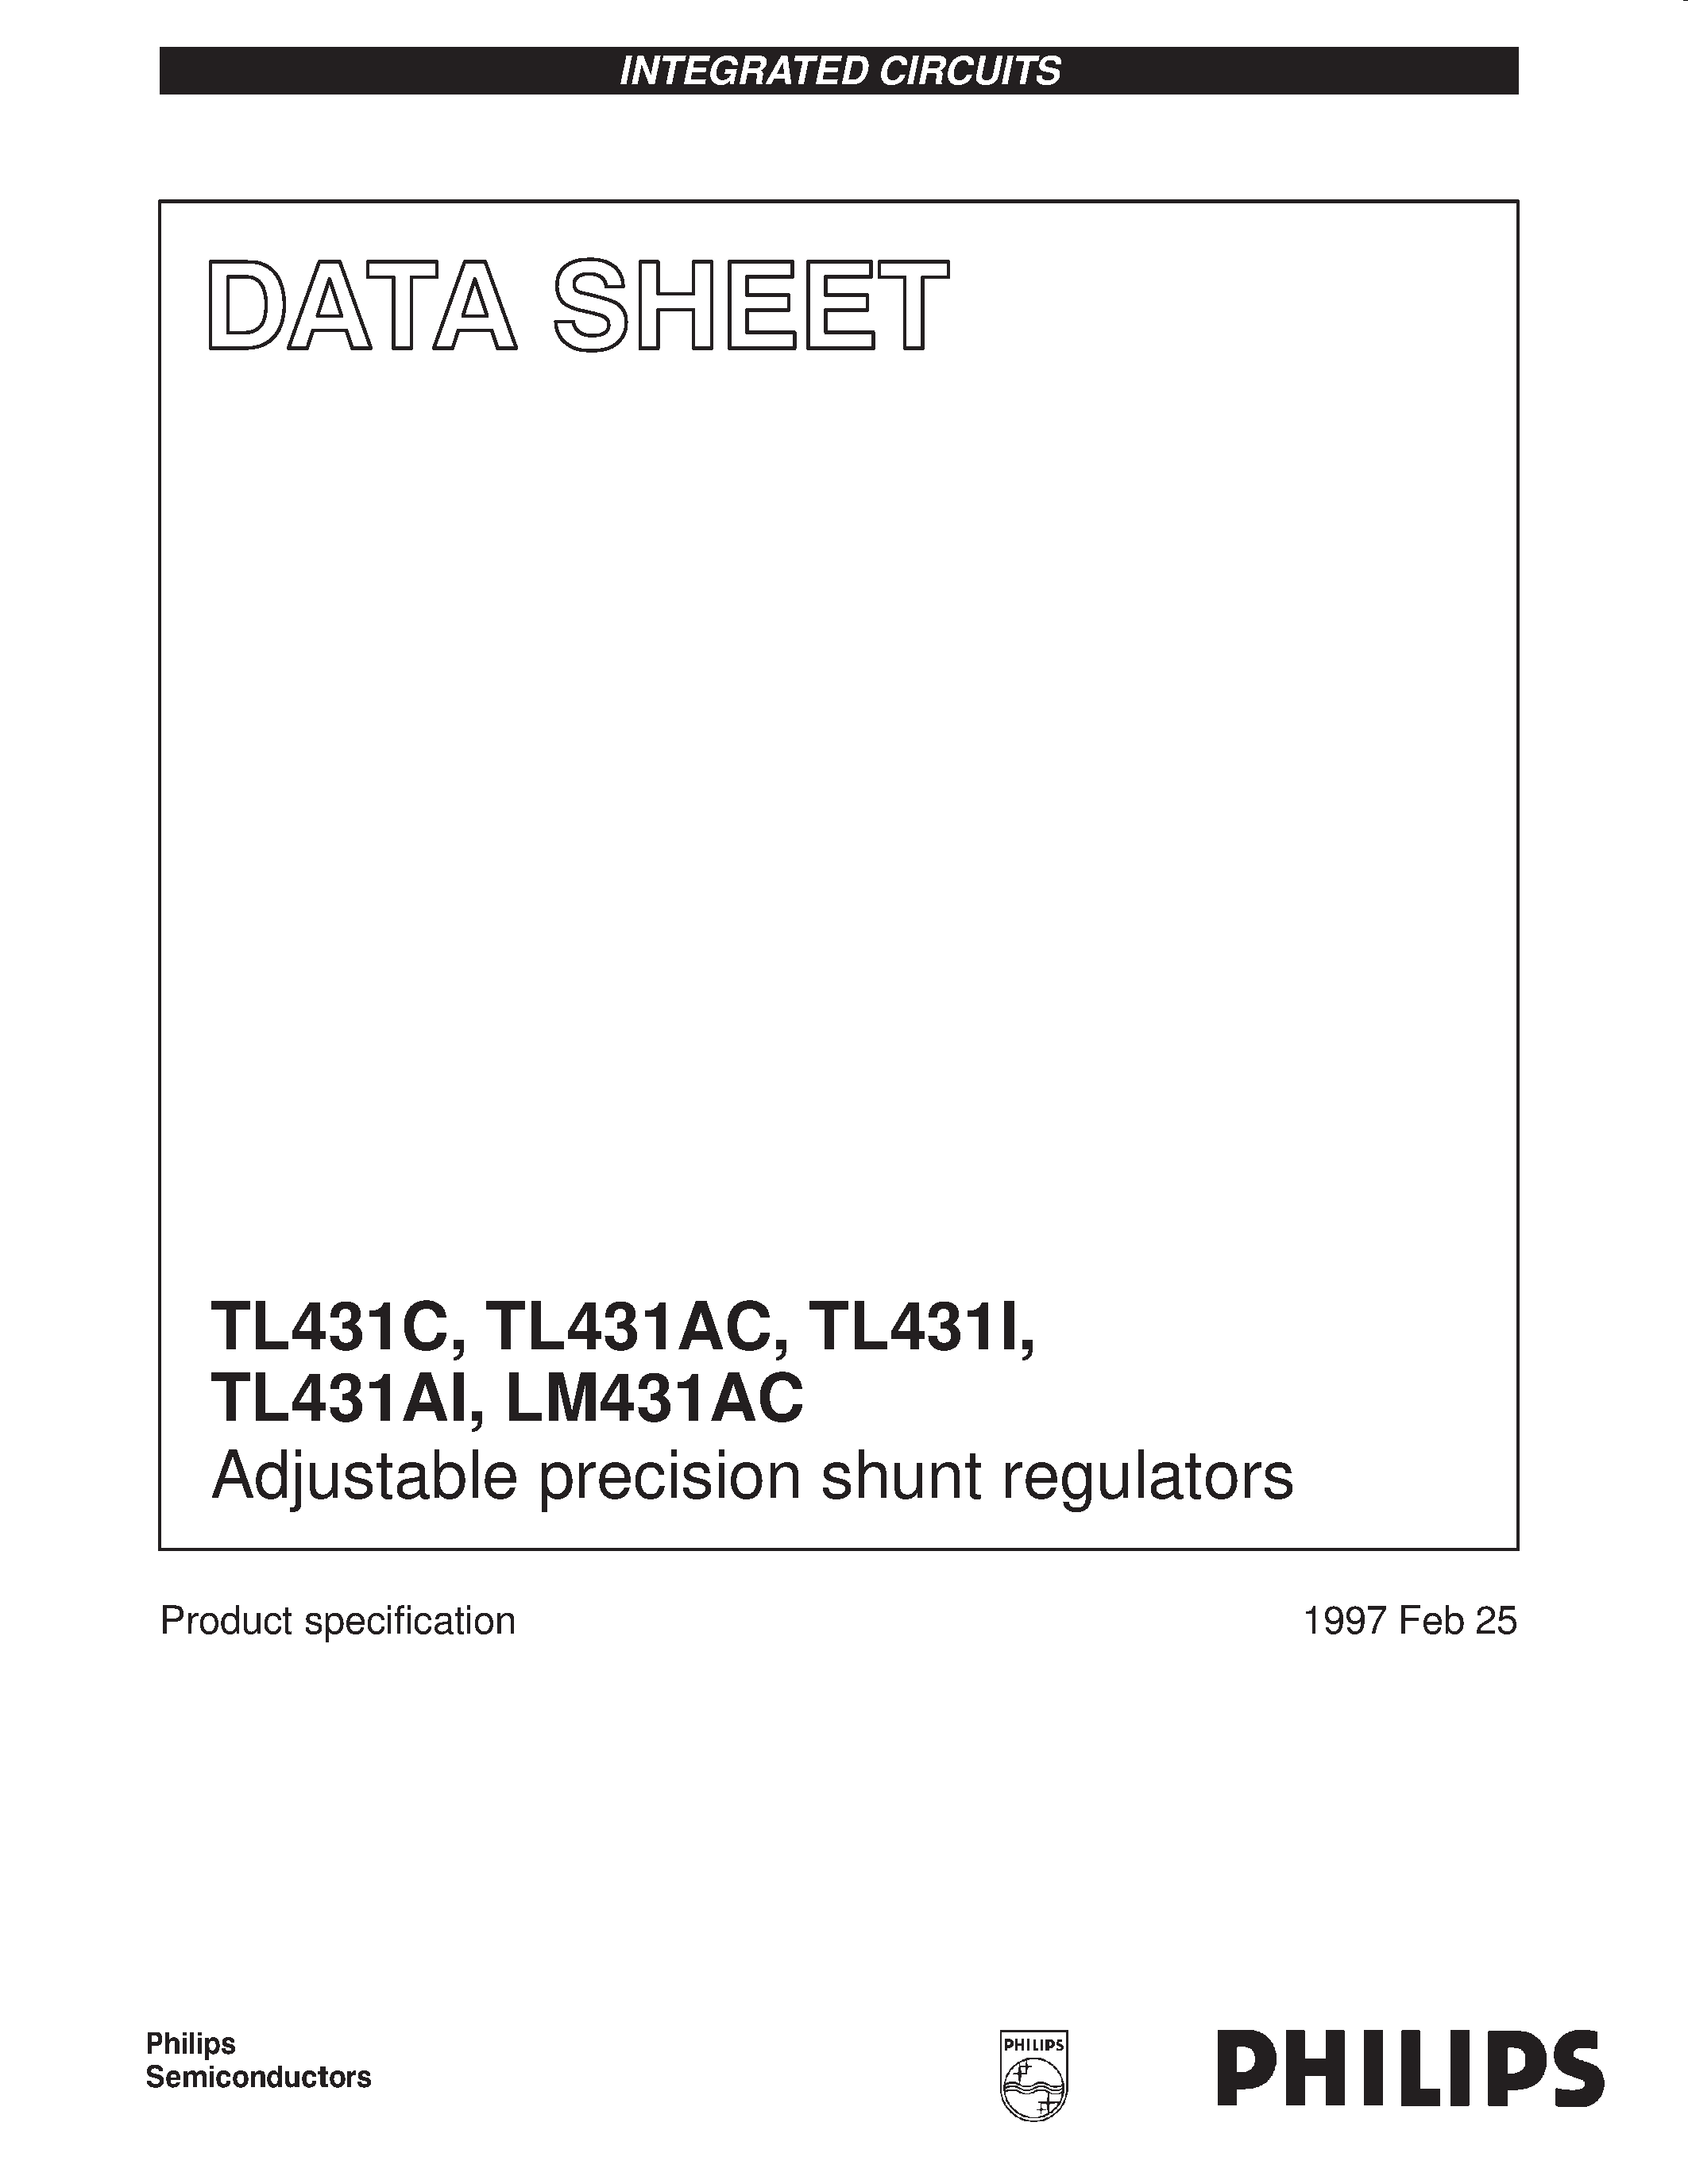 Даташит TL431IP - Adjustable precision shunt regulators страница 1